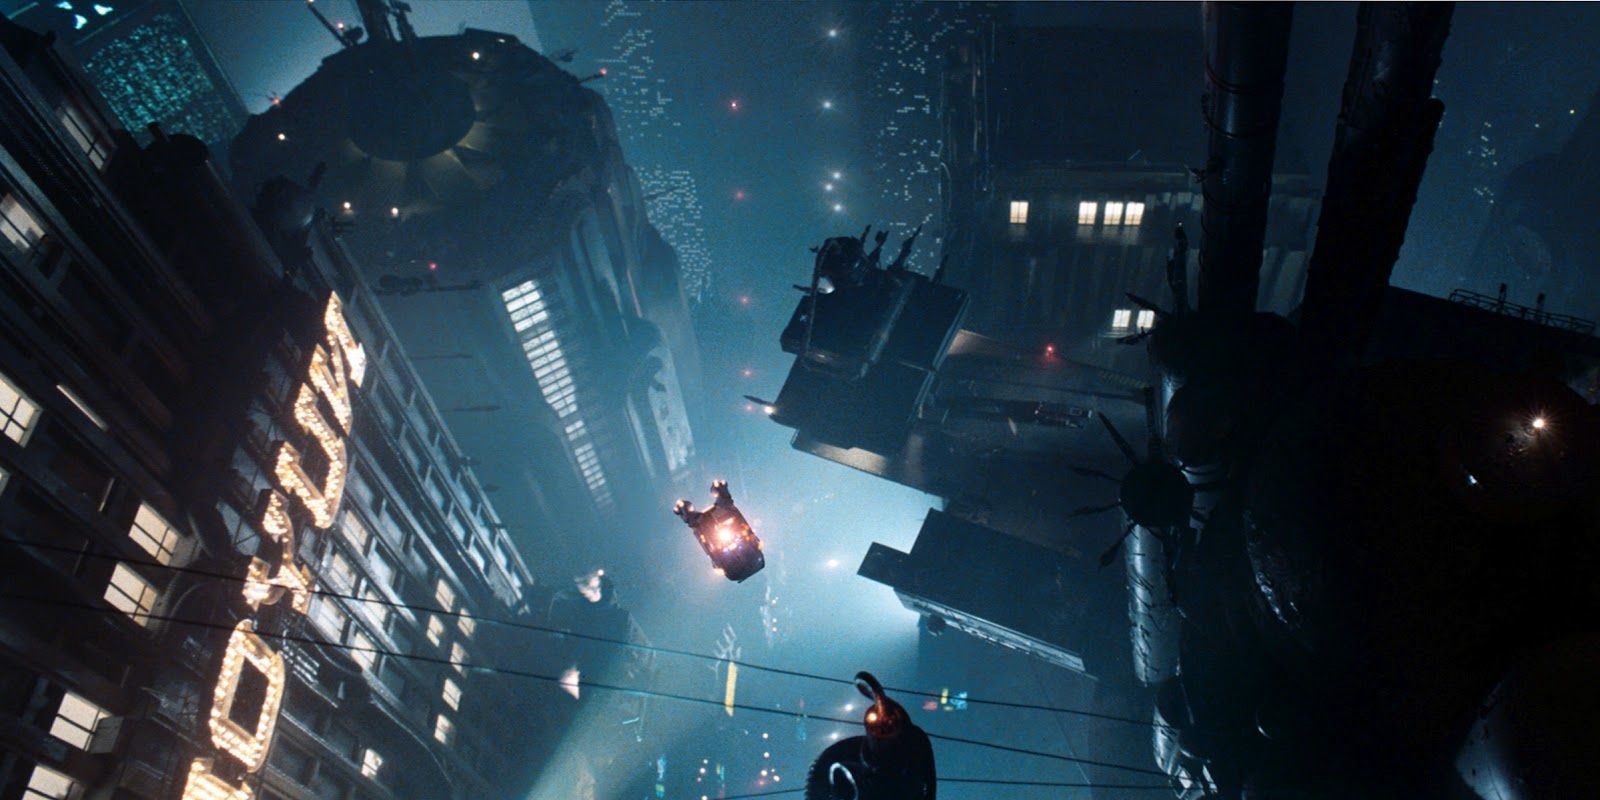 The LA skyline in Blade Runner